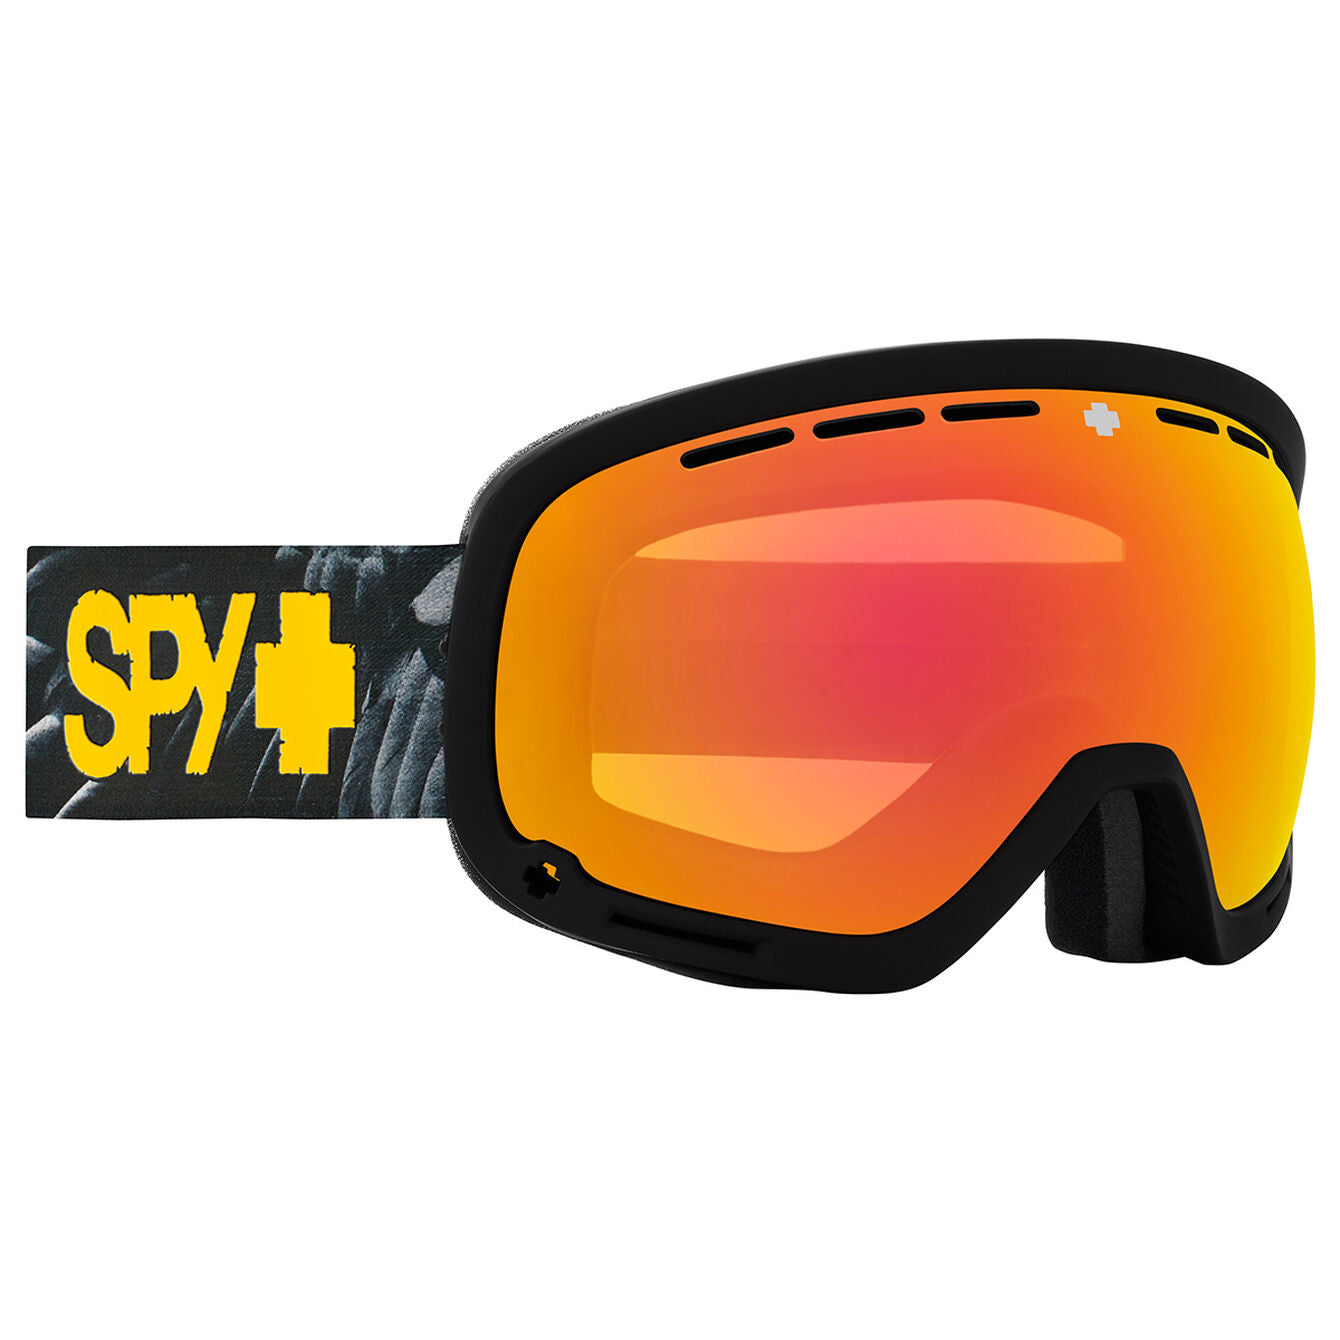 Spy - Marshall Snow Goggles